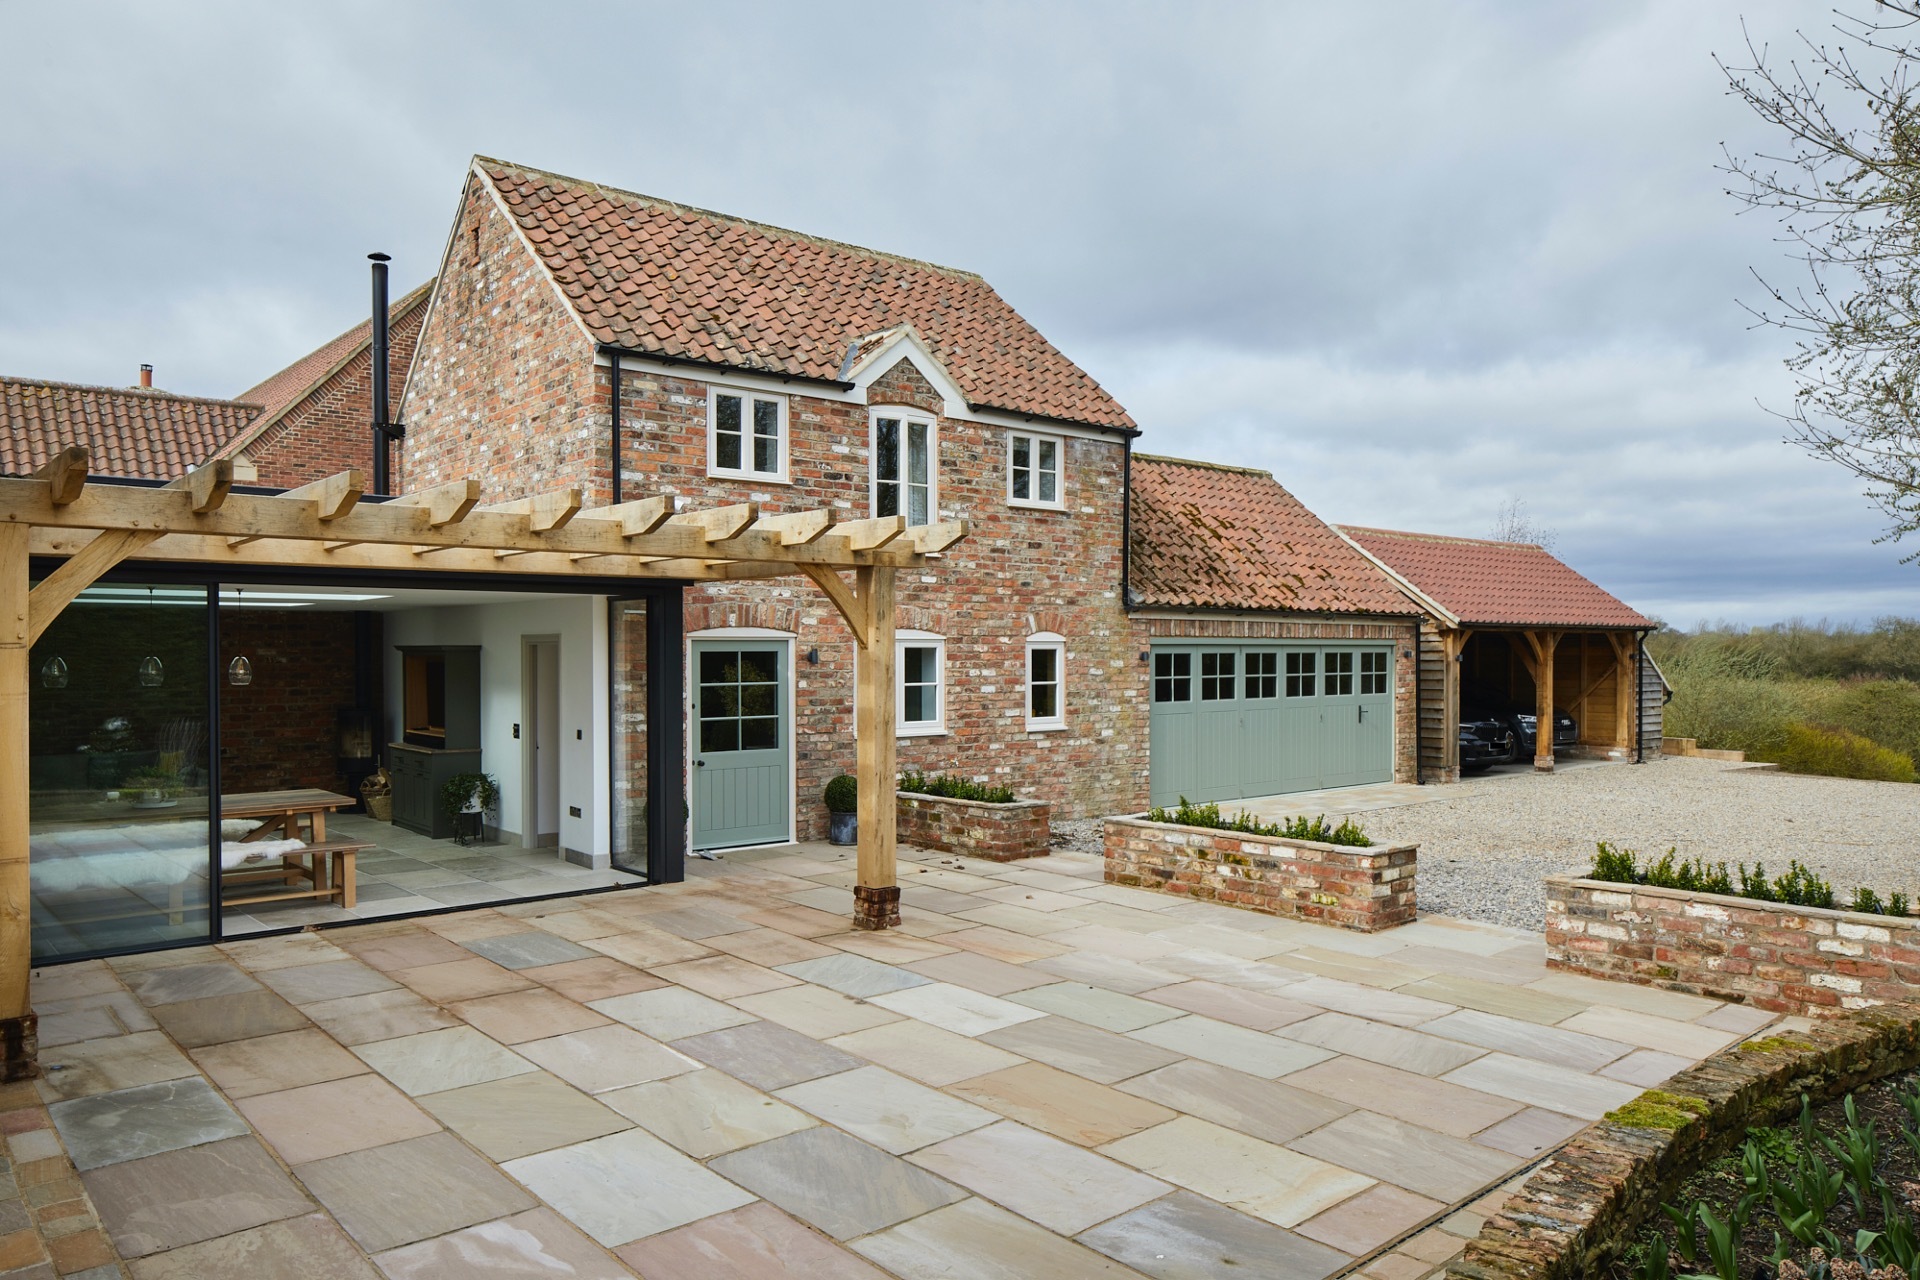 Completed external work including oak pergola, patio area & bespoke timber bifold doors to garage